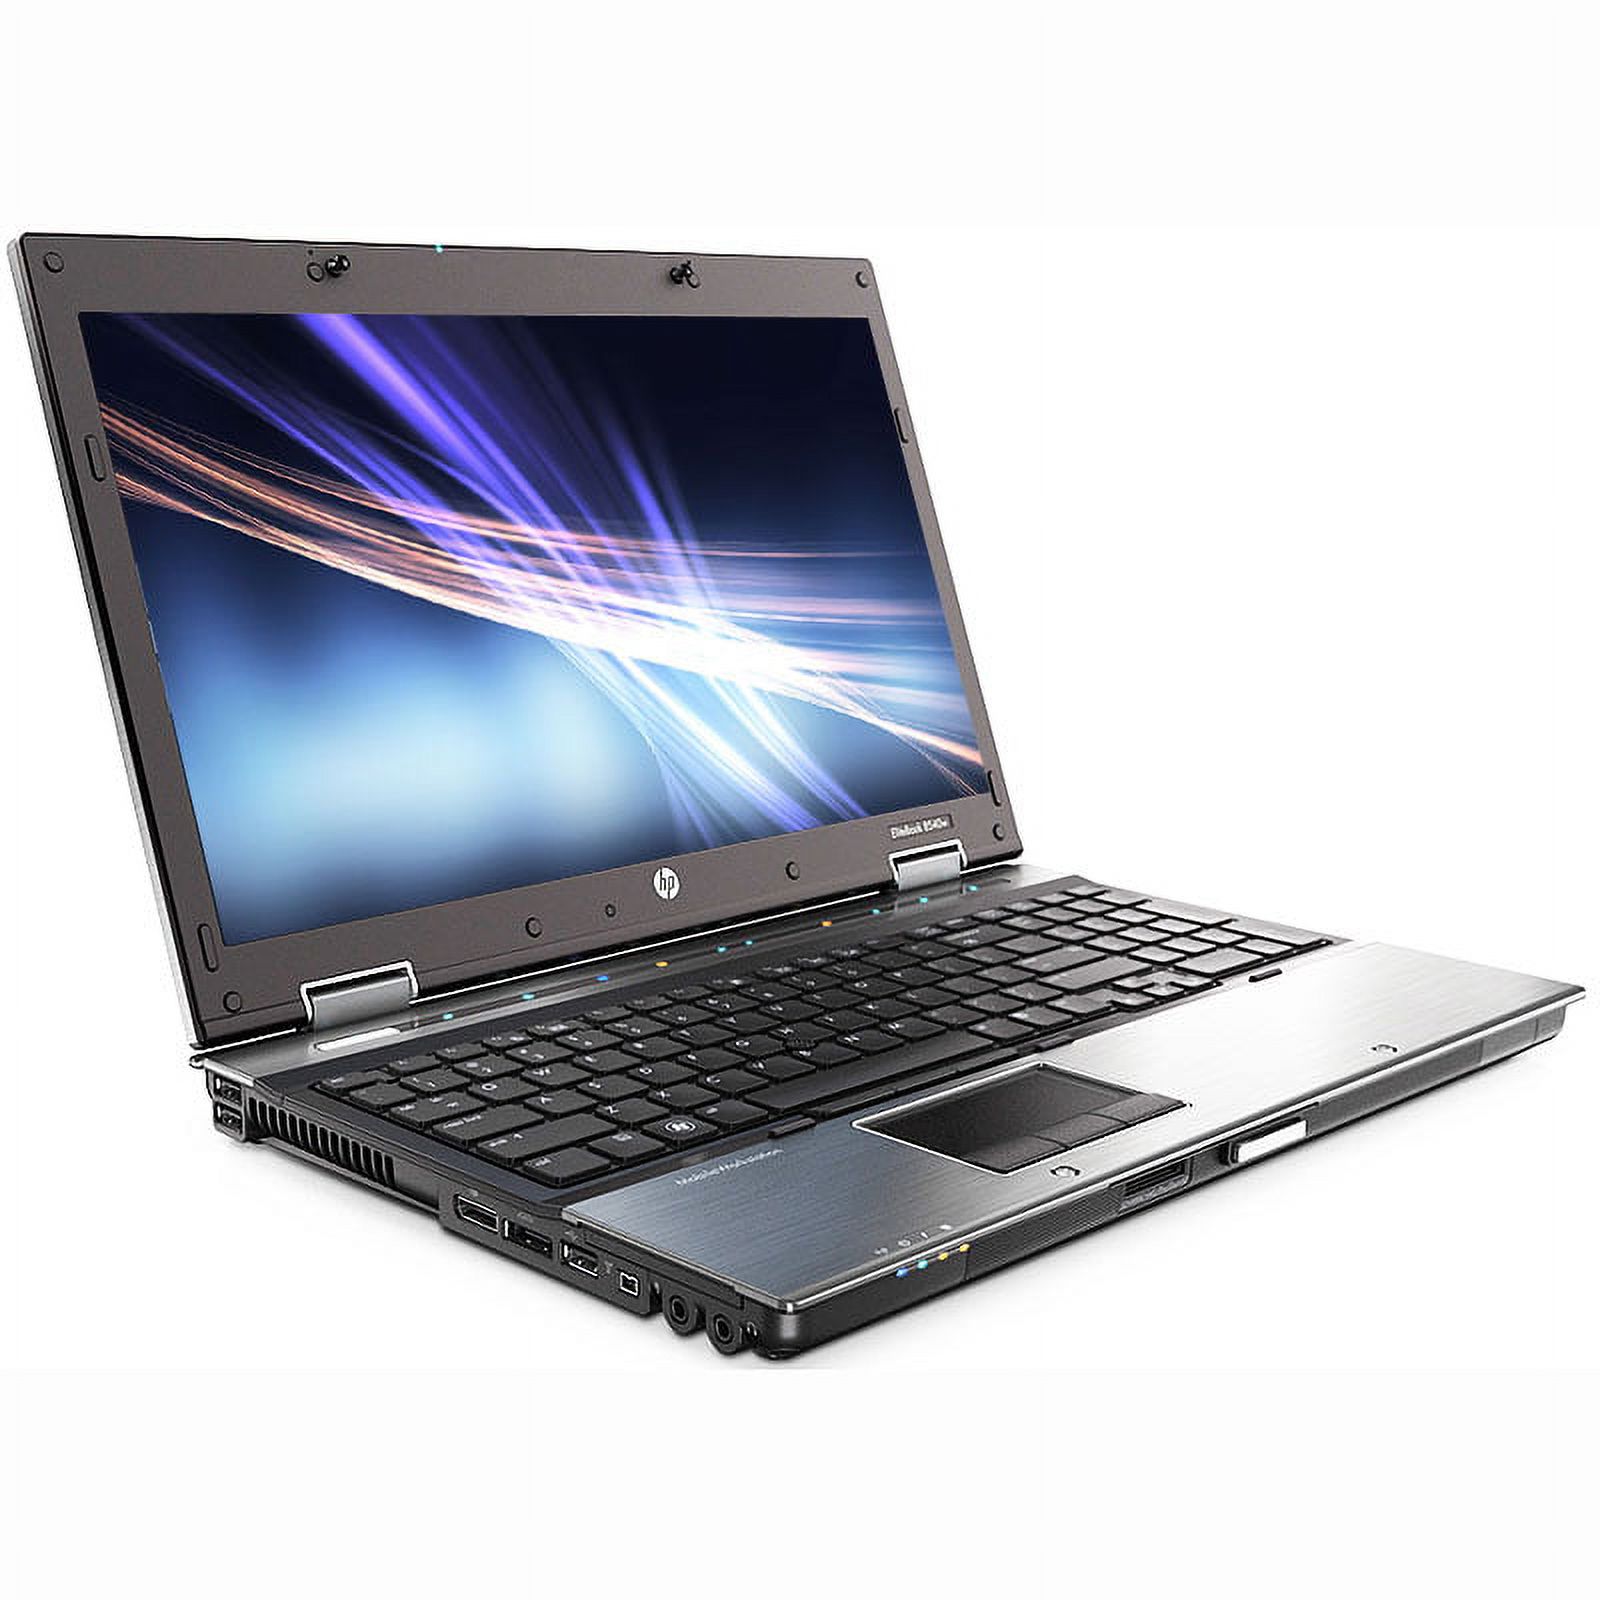 Used HP EliteBook 8540p 2.8GHz i7 4GB 320GB DVD Windows 10 Pro 64 Laptop B Camera - image 2 of 4